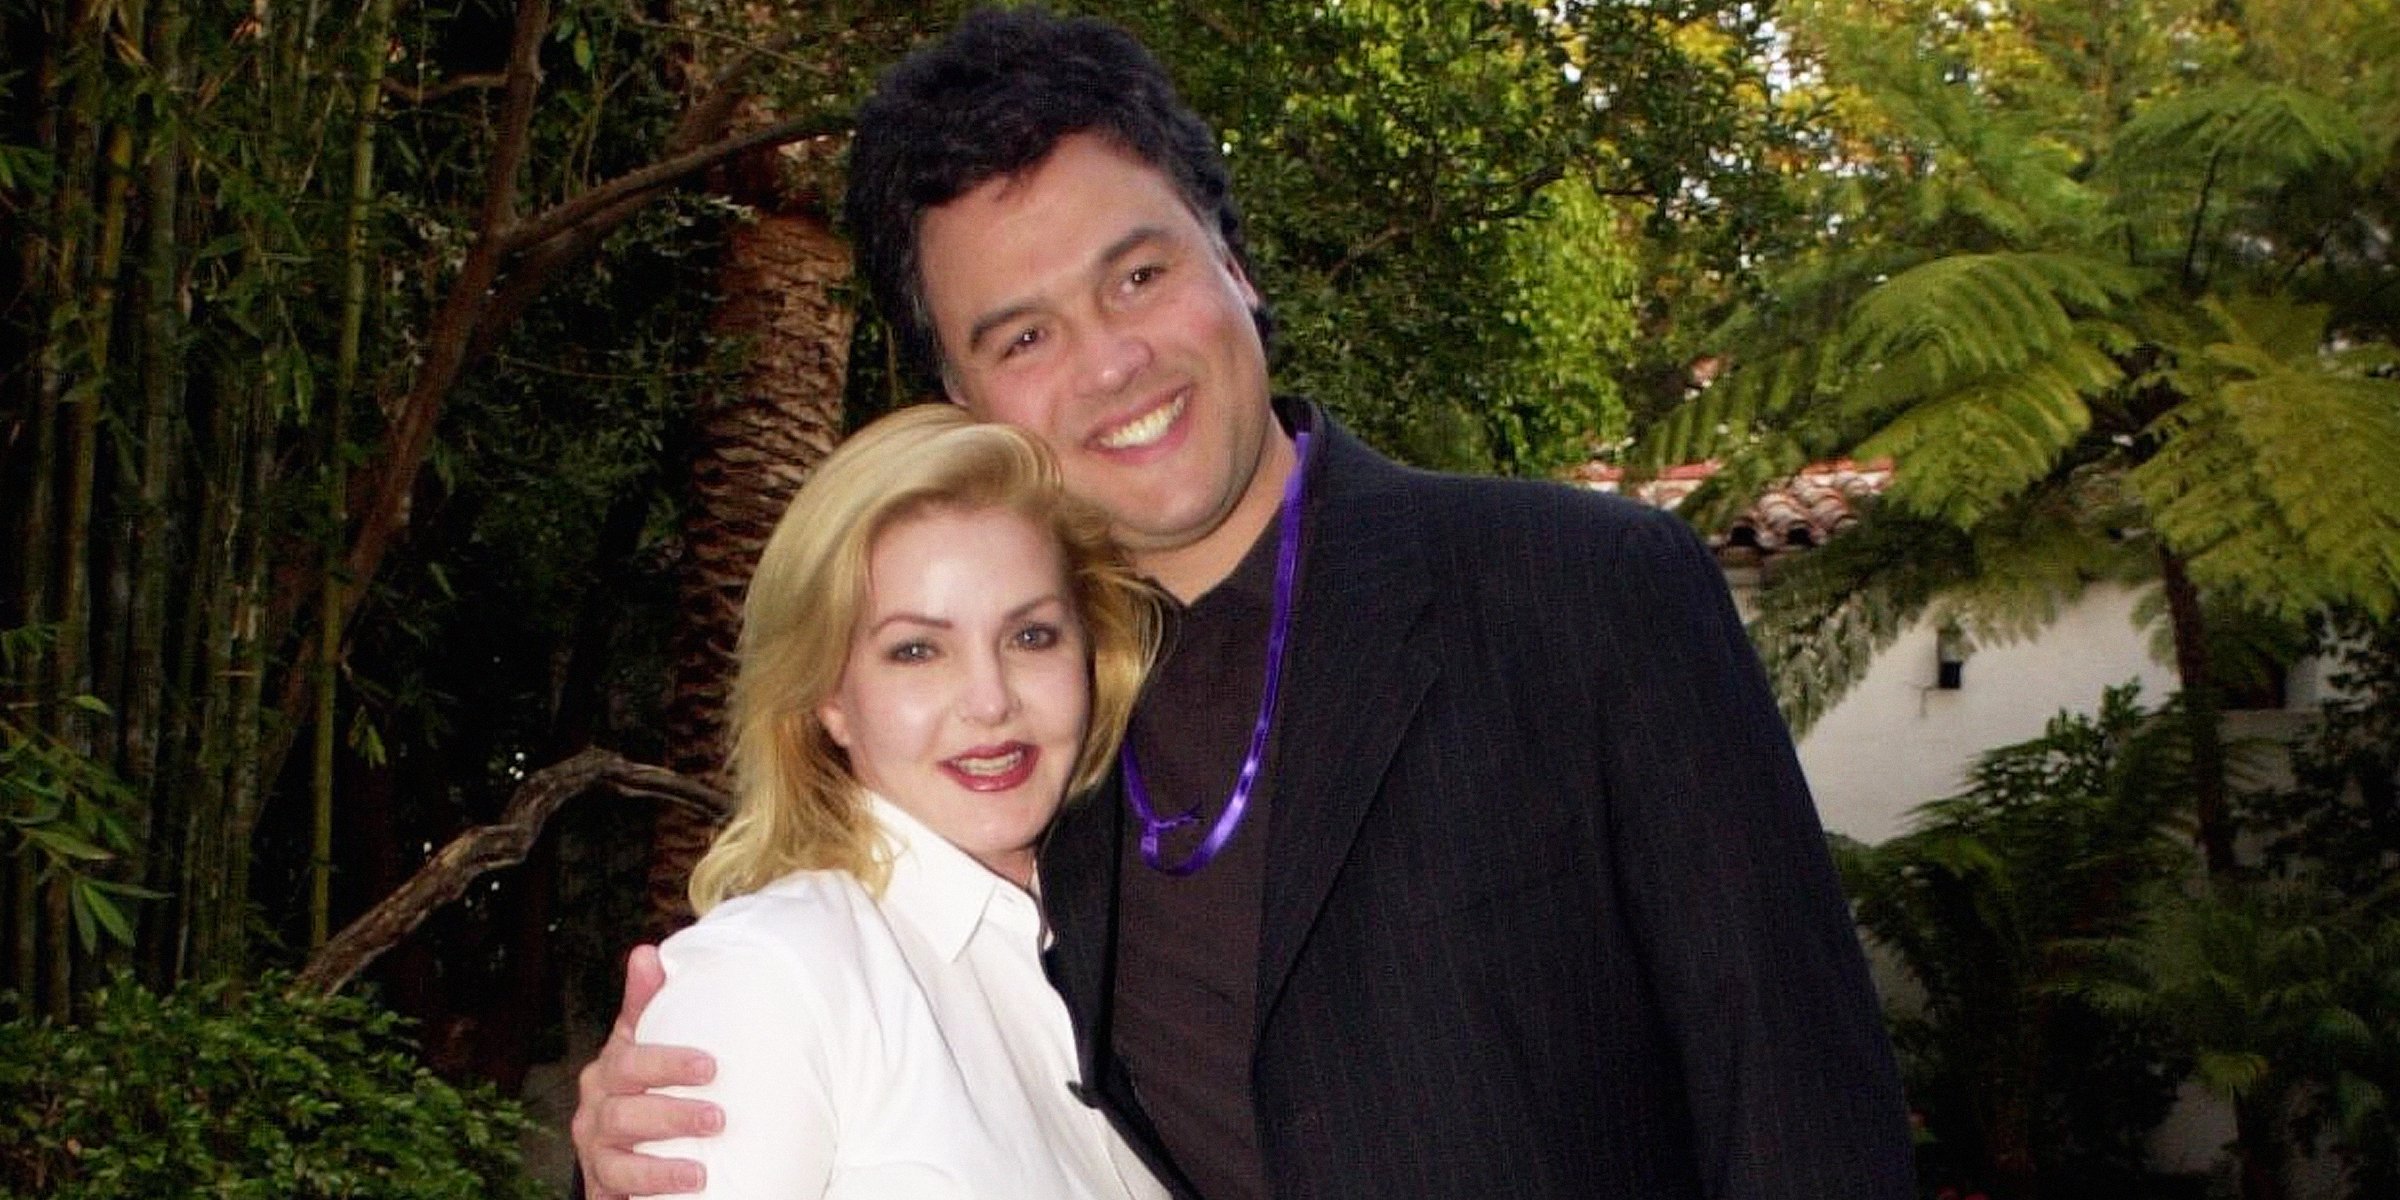 Marco Garibaldi Was Priscilla Presley's Mysterious LongTerm Partner